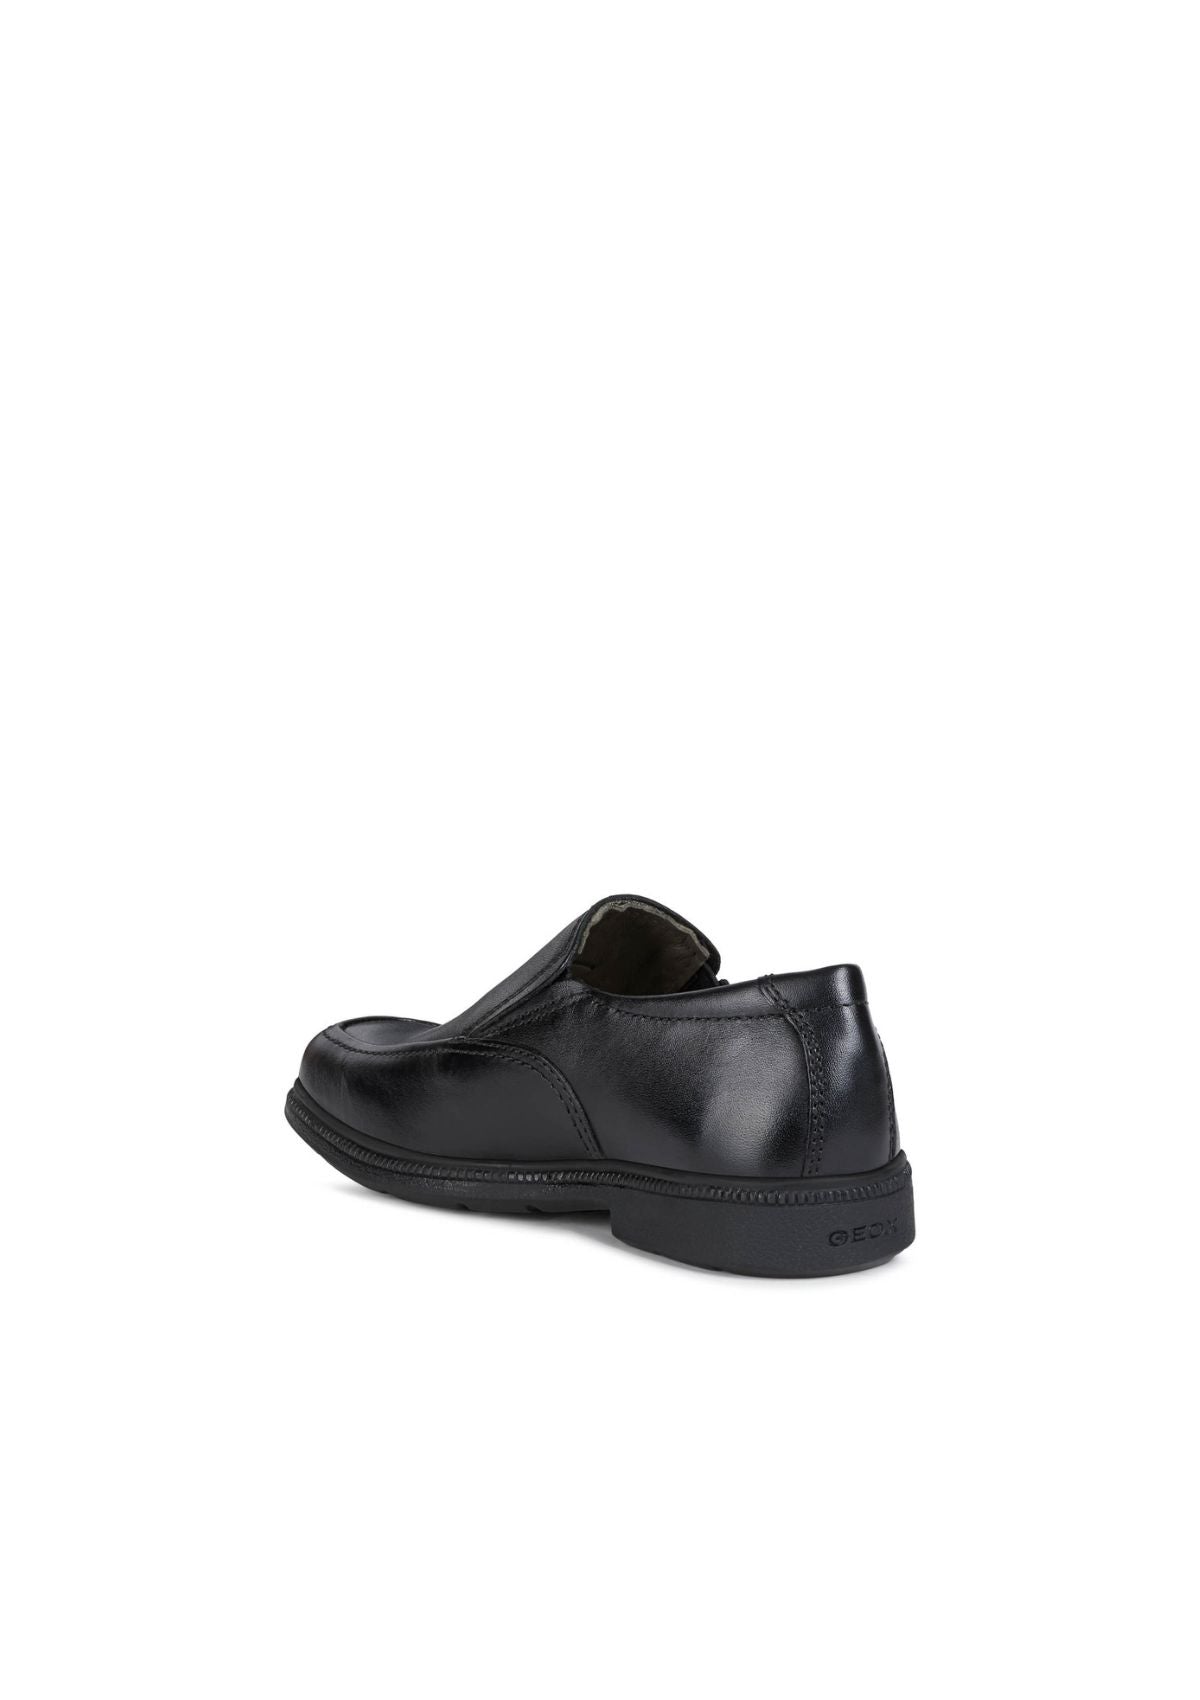 Geox Boys School Shoes FEDERICO Slip-On Black back